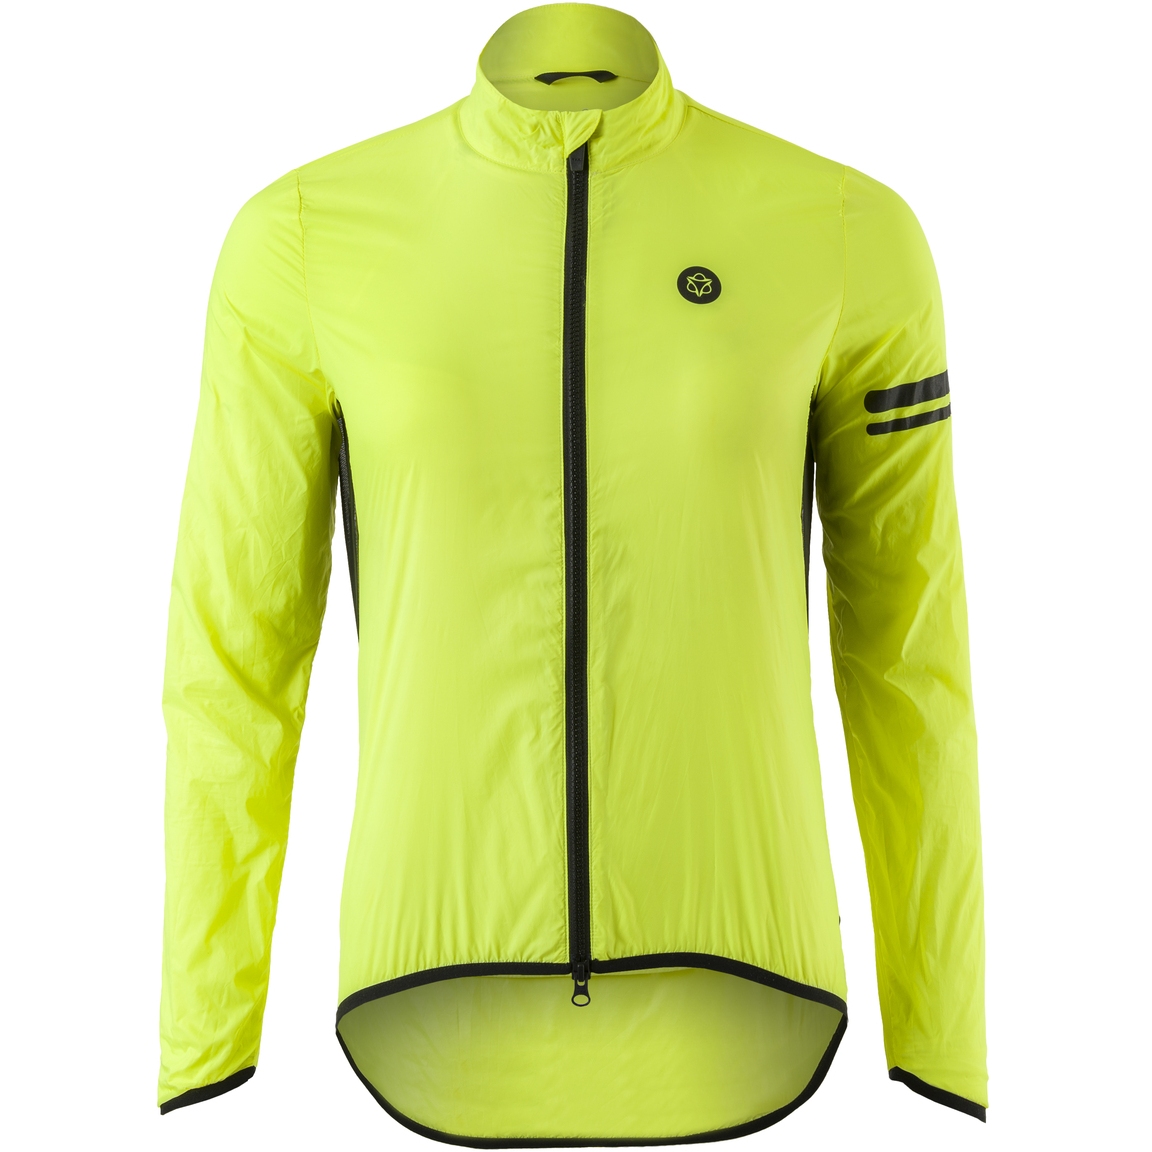 AGU Essential Wind Jacket II Women - hivis neon yellow | BIKE24